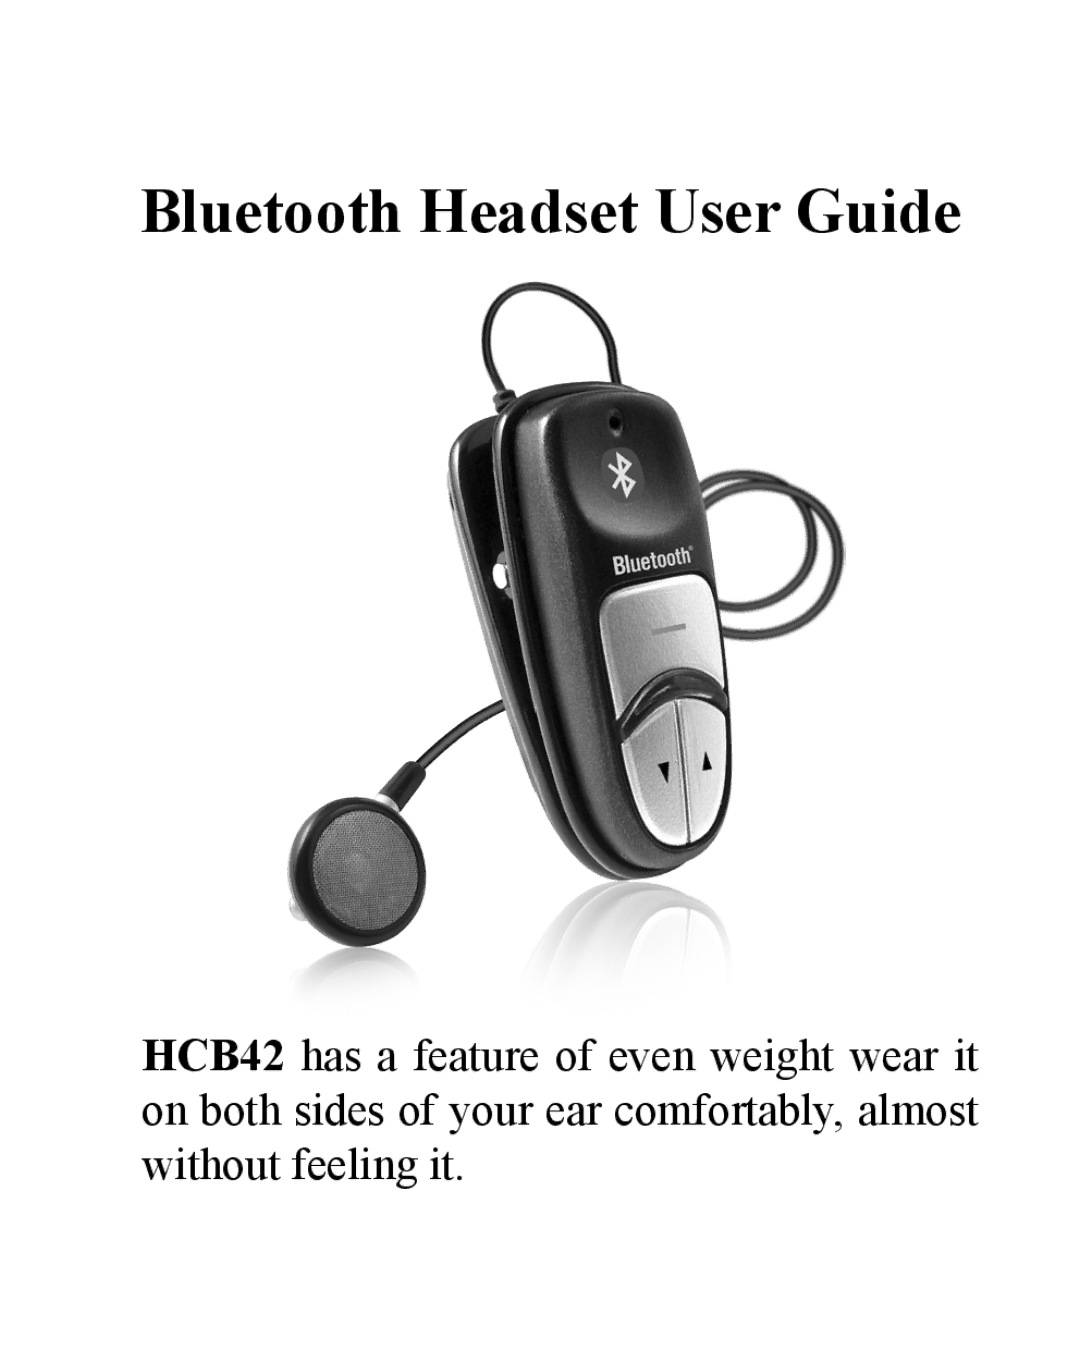 Huey Chiao HCB42 manual Bluetooth Headset User Guide 